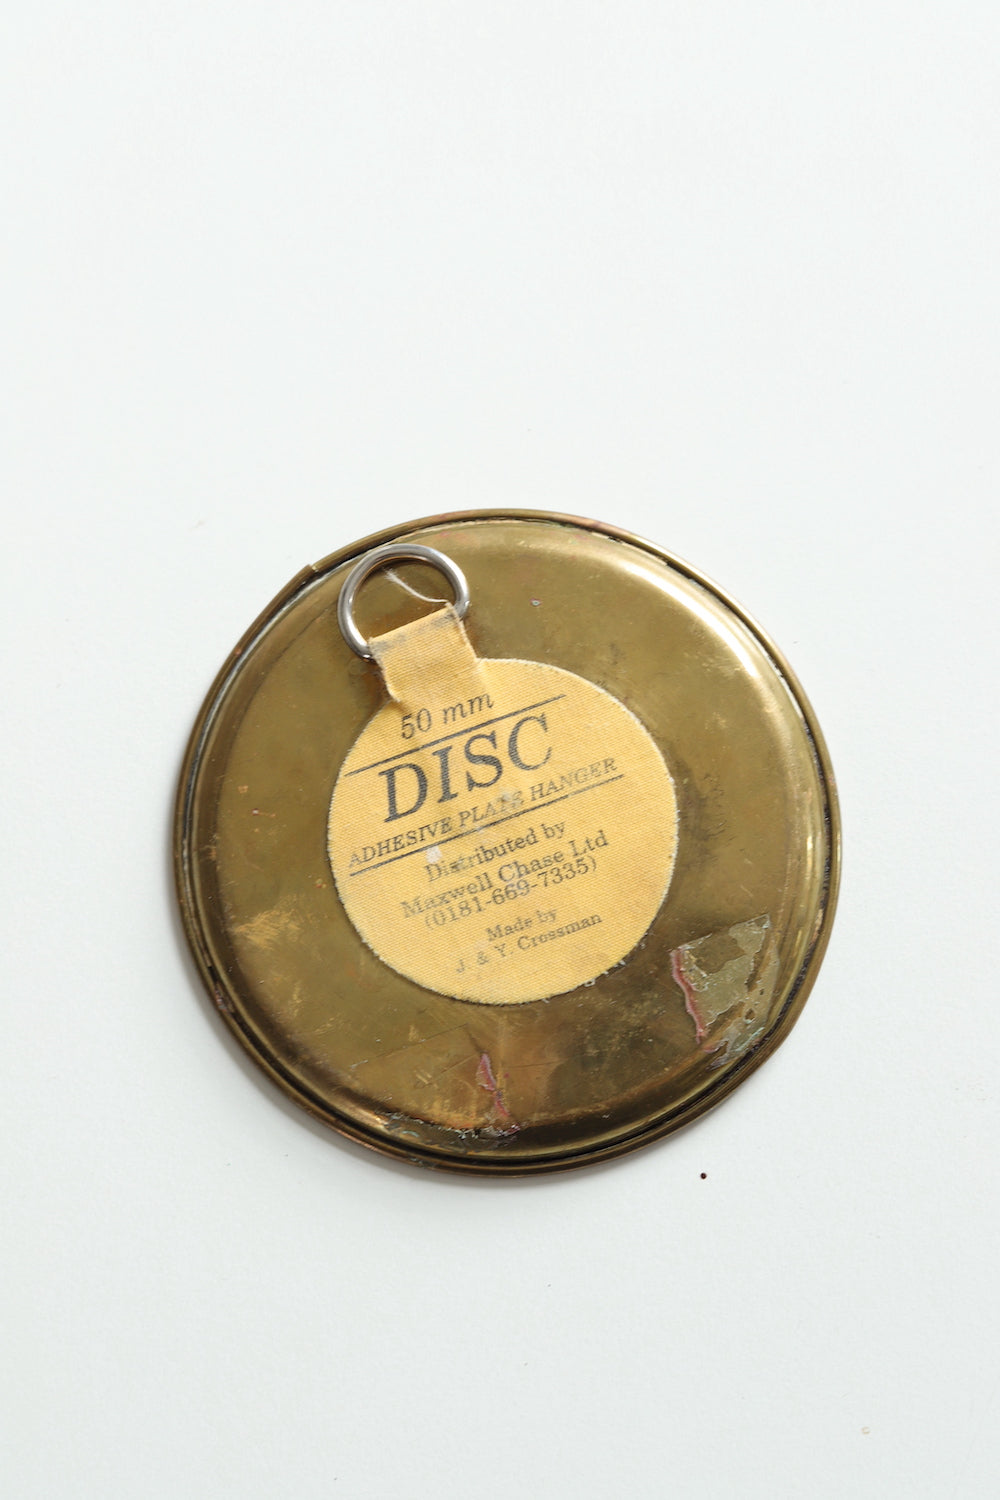 Small round brass plate